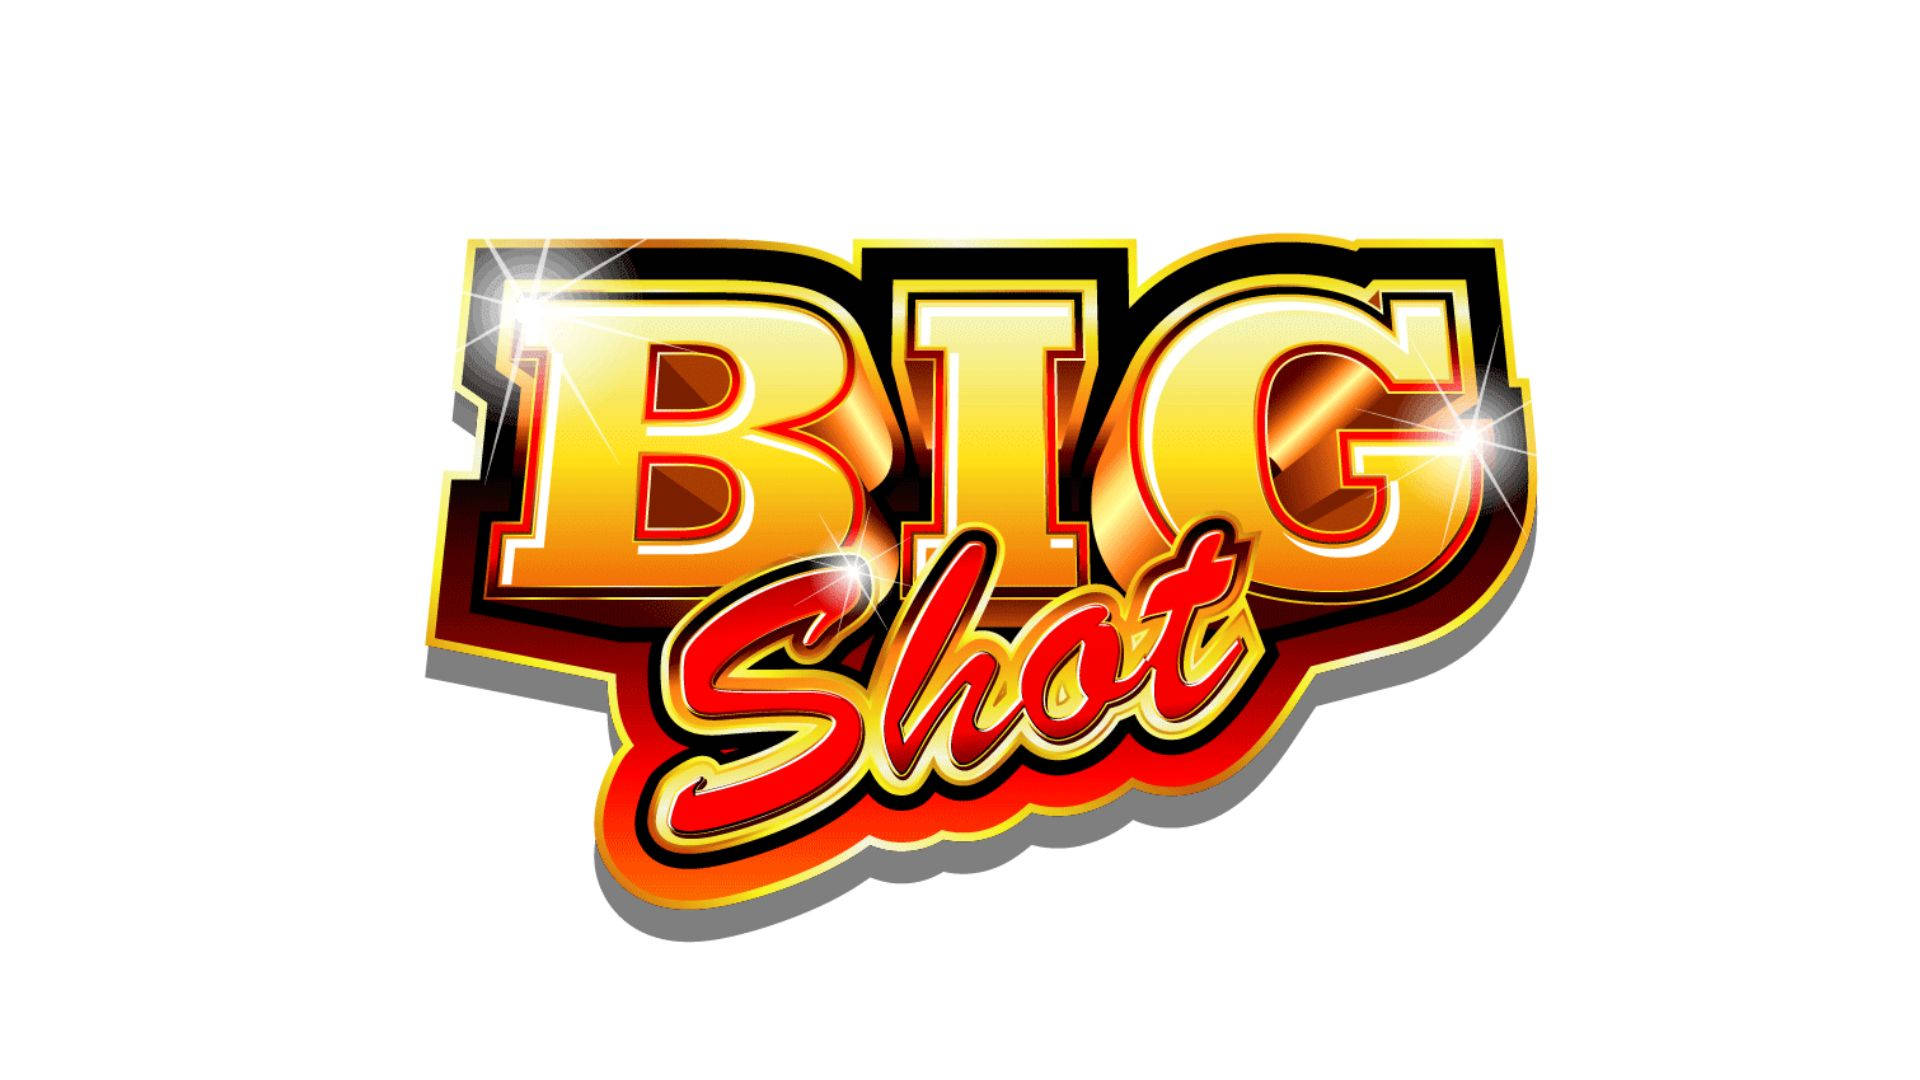 Disney Big Shot Logo